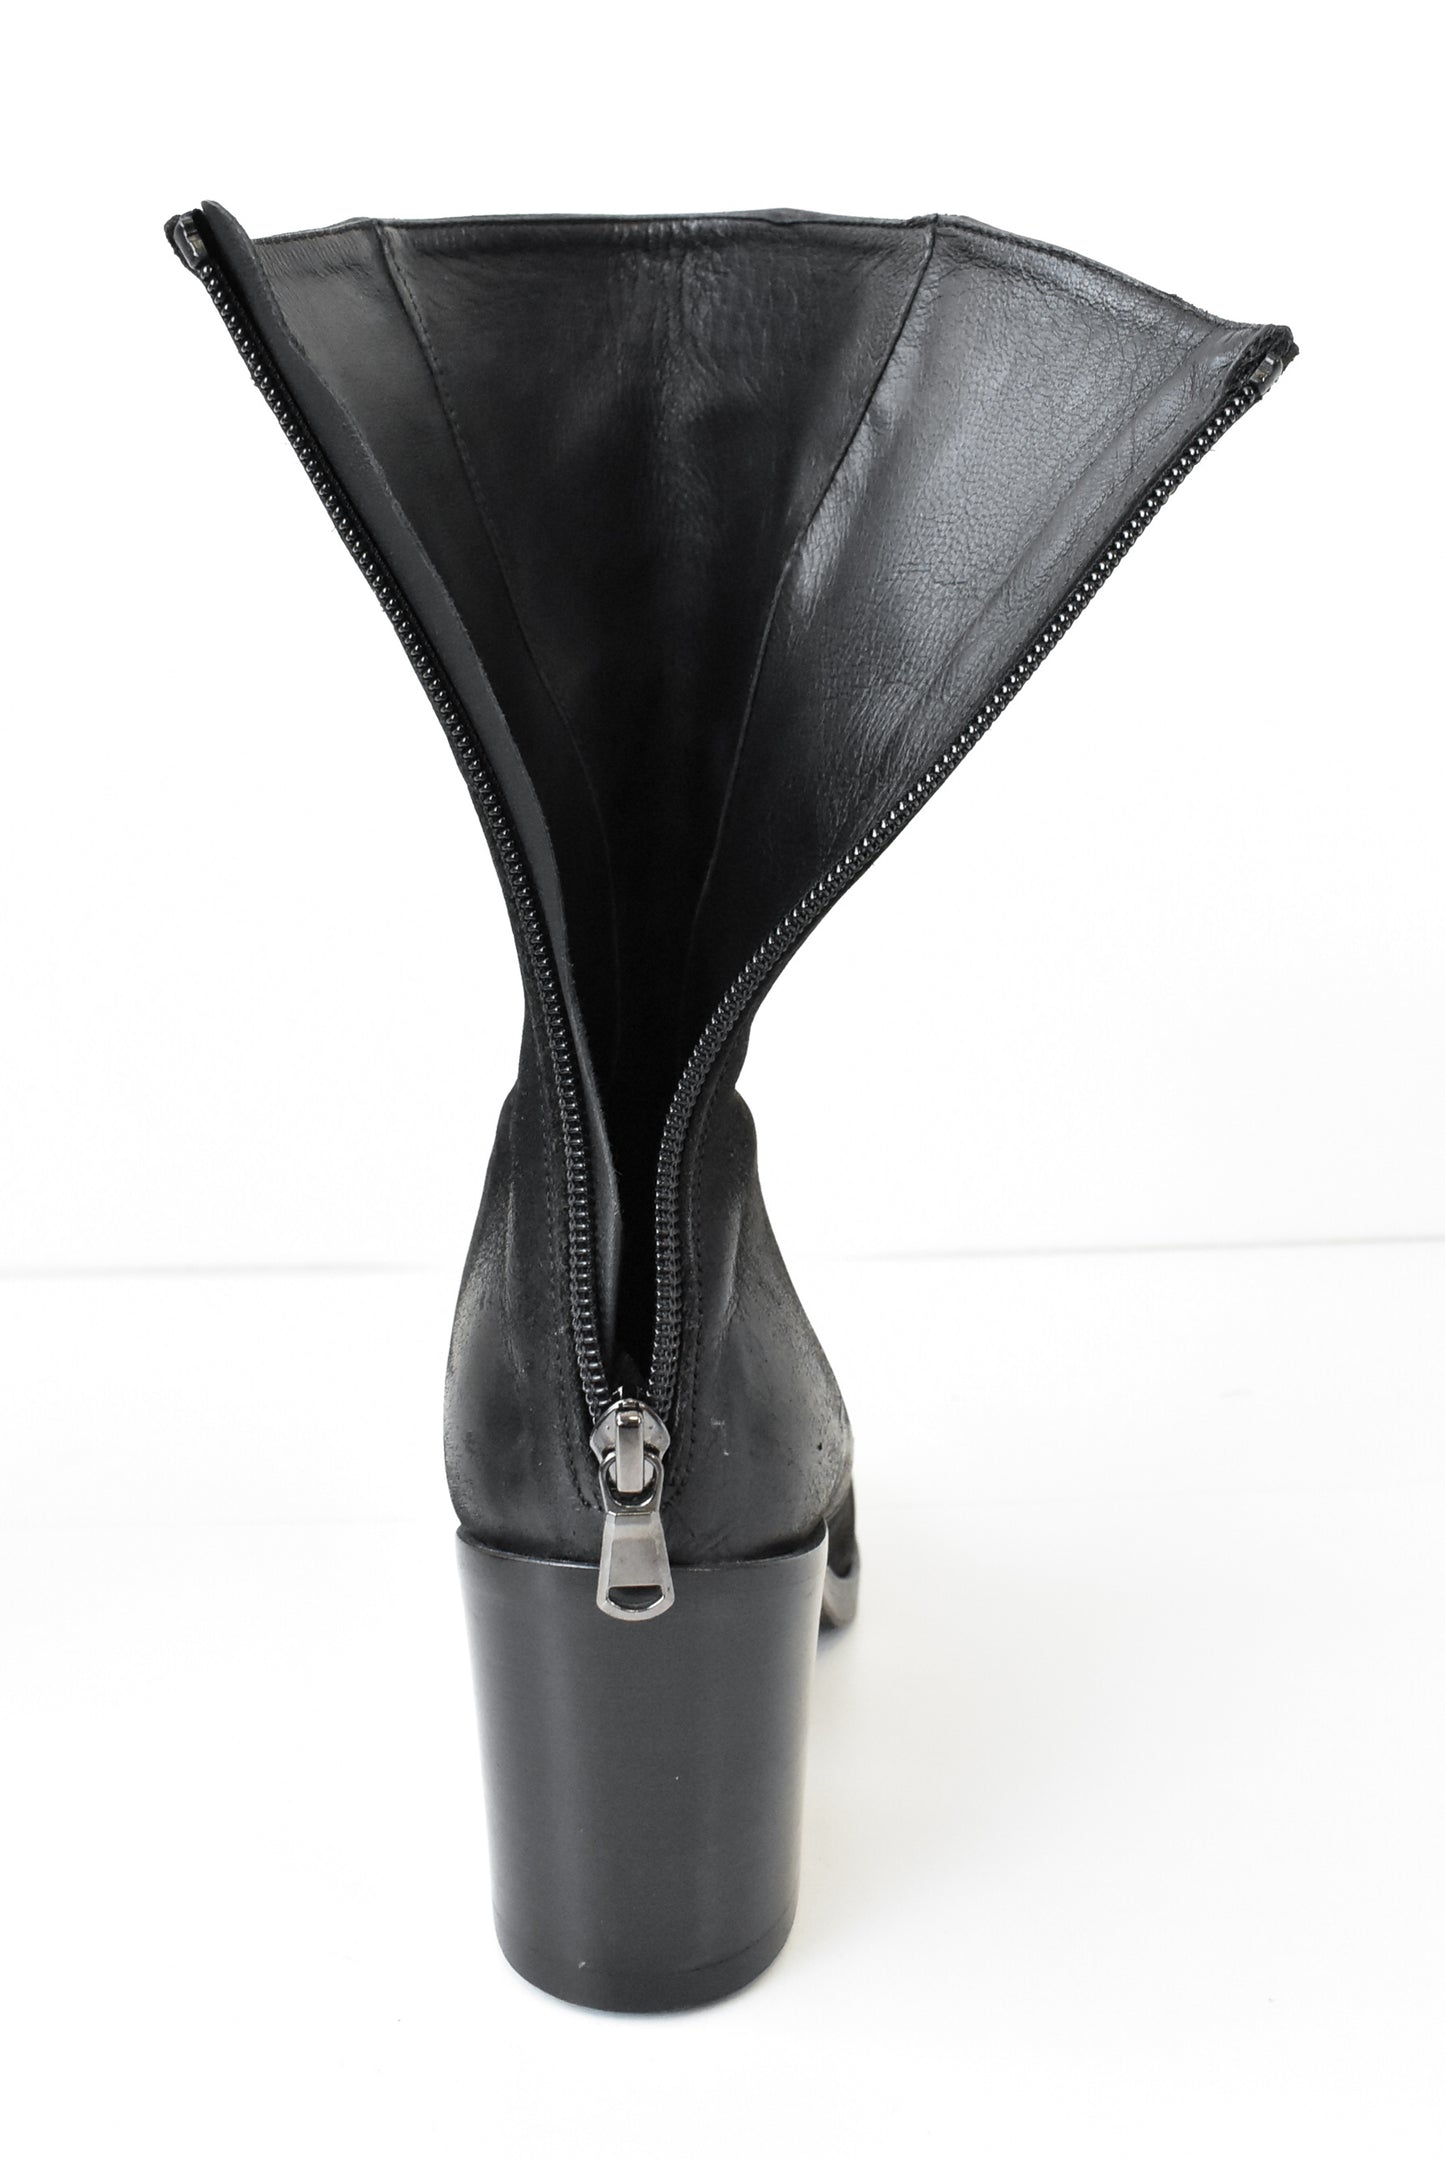 Elena Iachi leather heeled boots, size 38